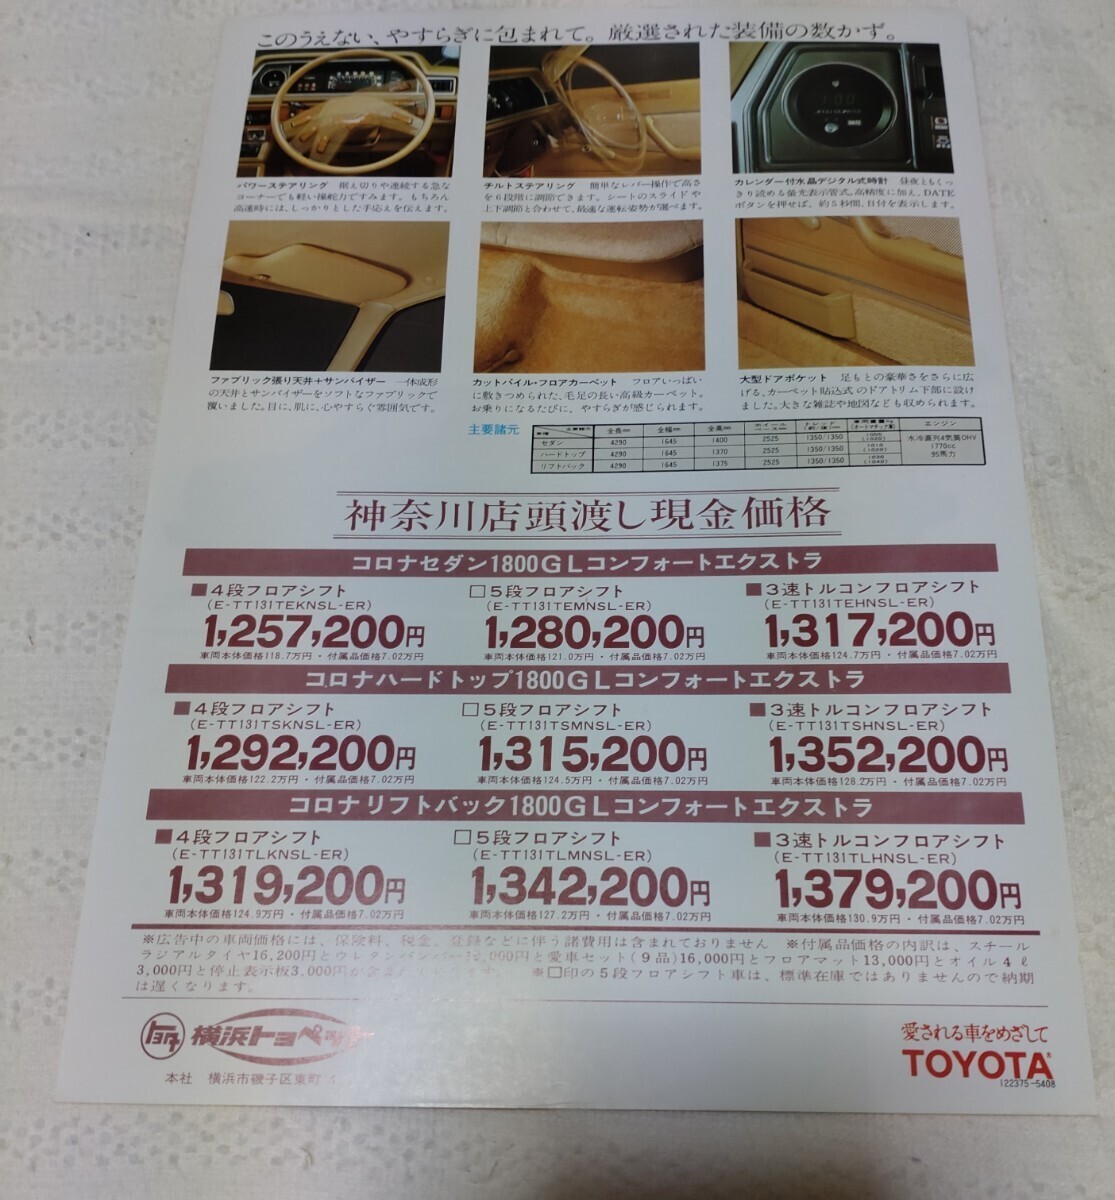  Toyota 　...　1800GL ... тигр 　 каталог 